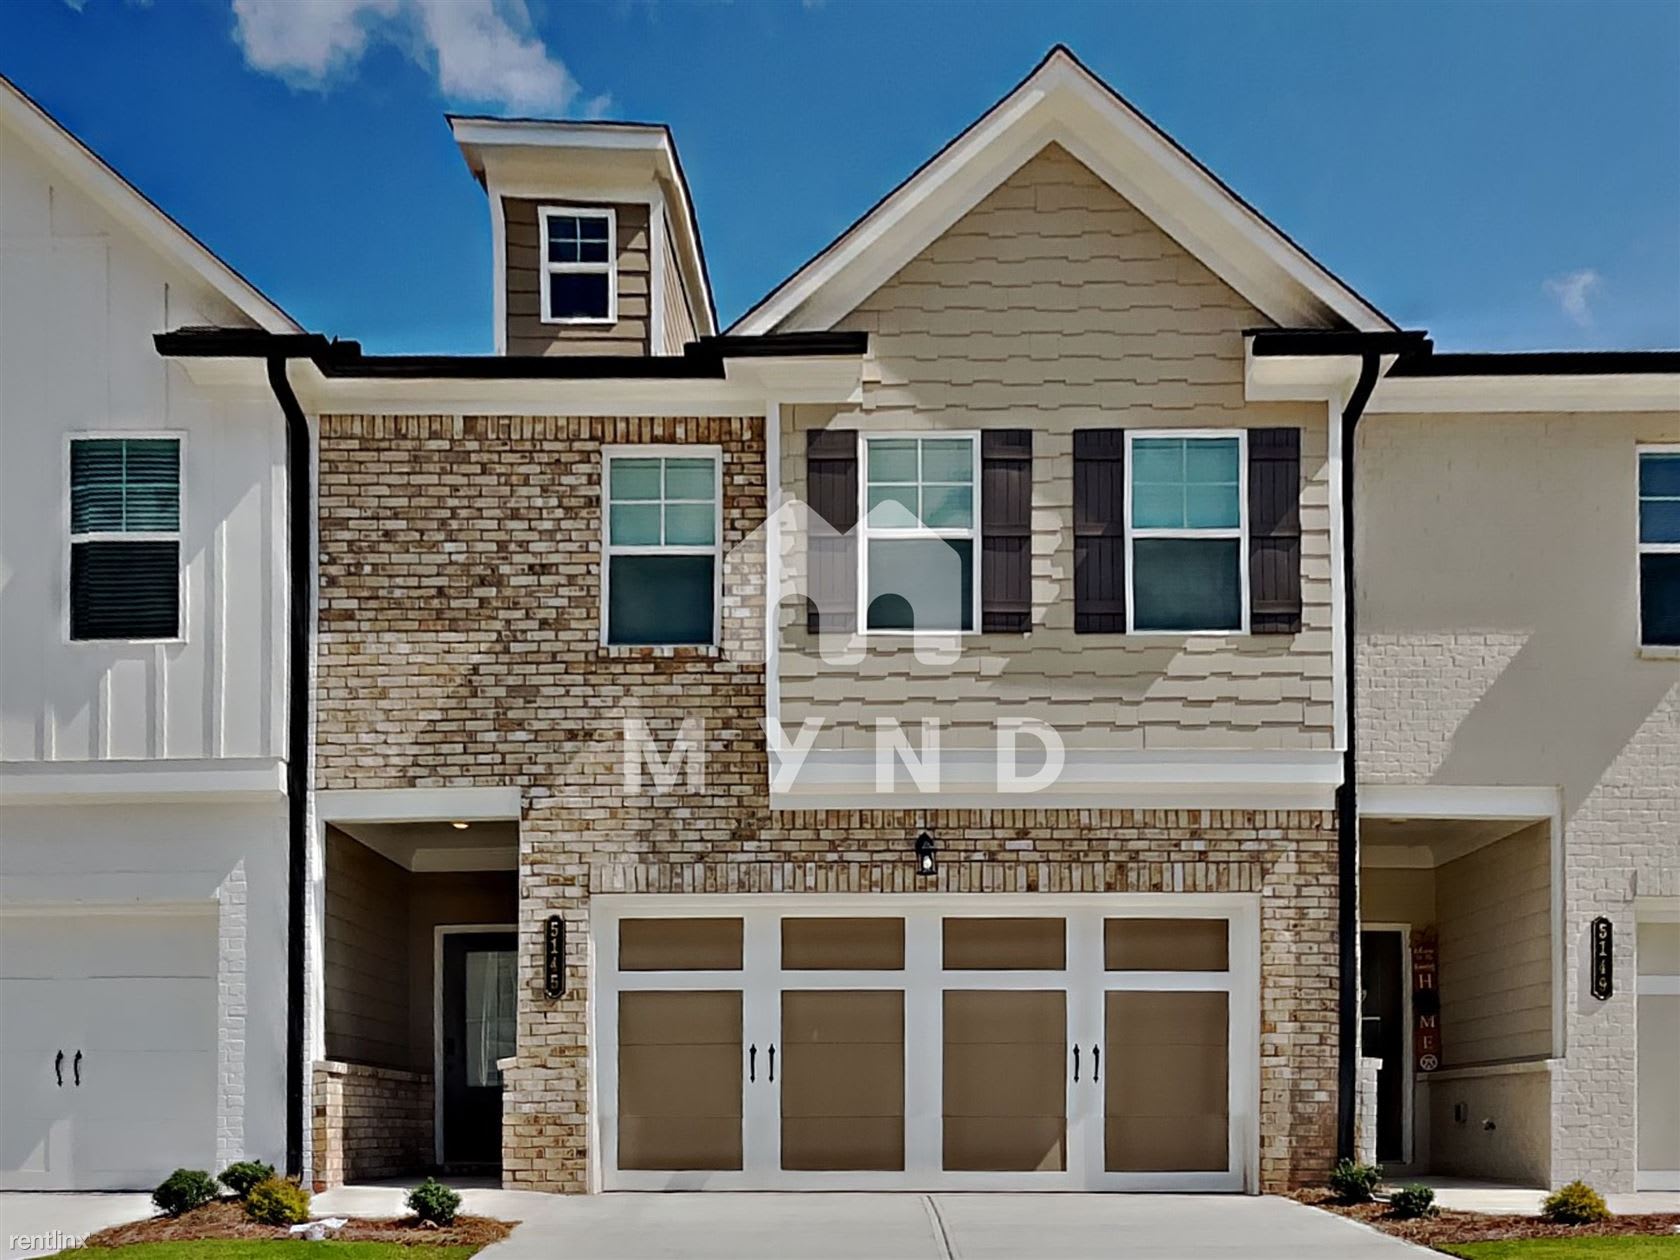 Story Mundy Mill - Apartments in Oakwood, GA